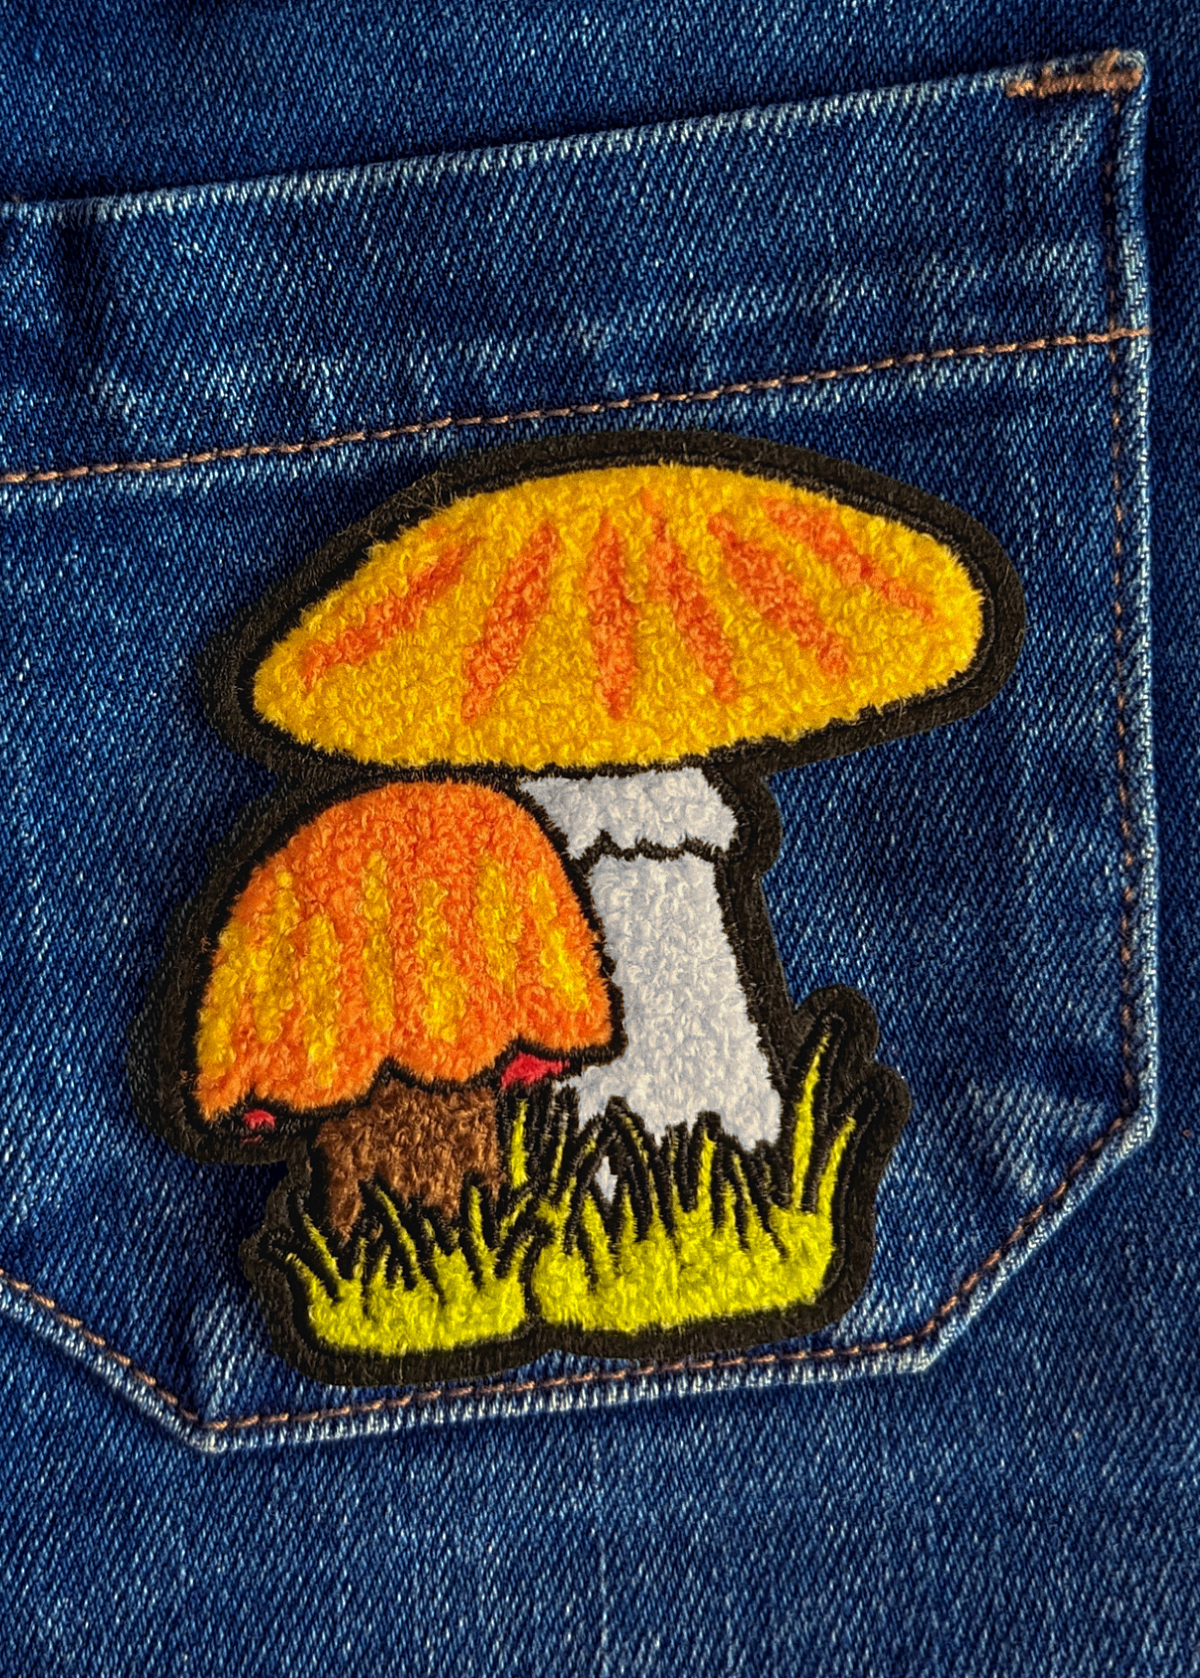 70s inspired fuzzy mushroom sew on patch